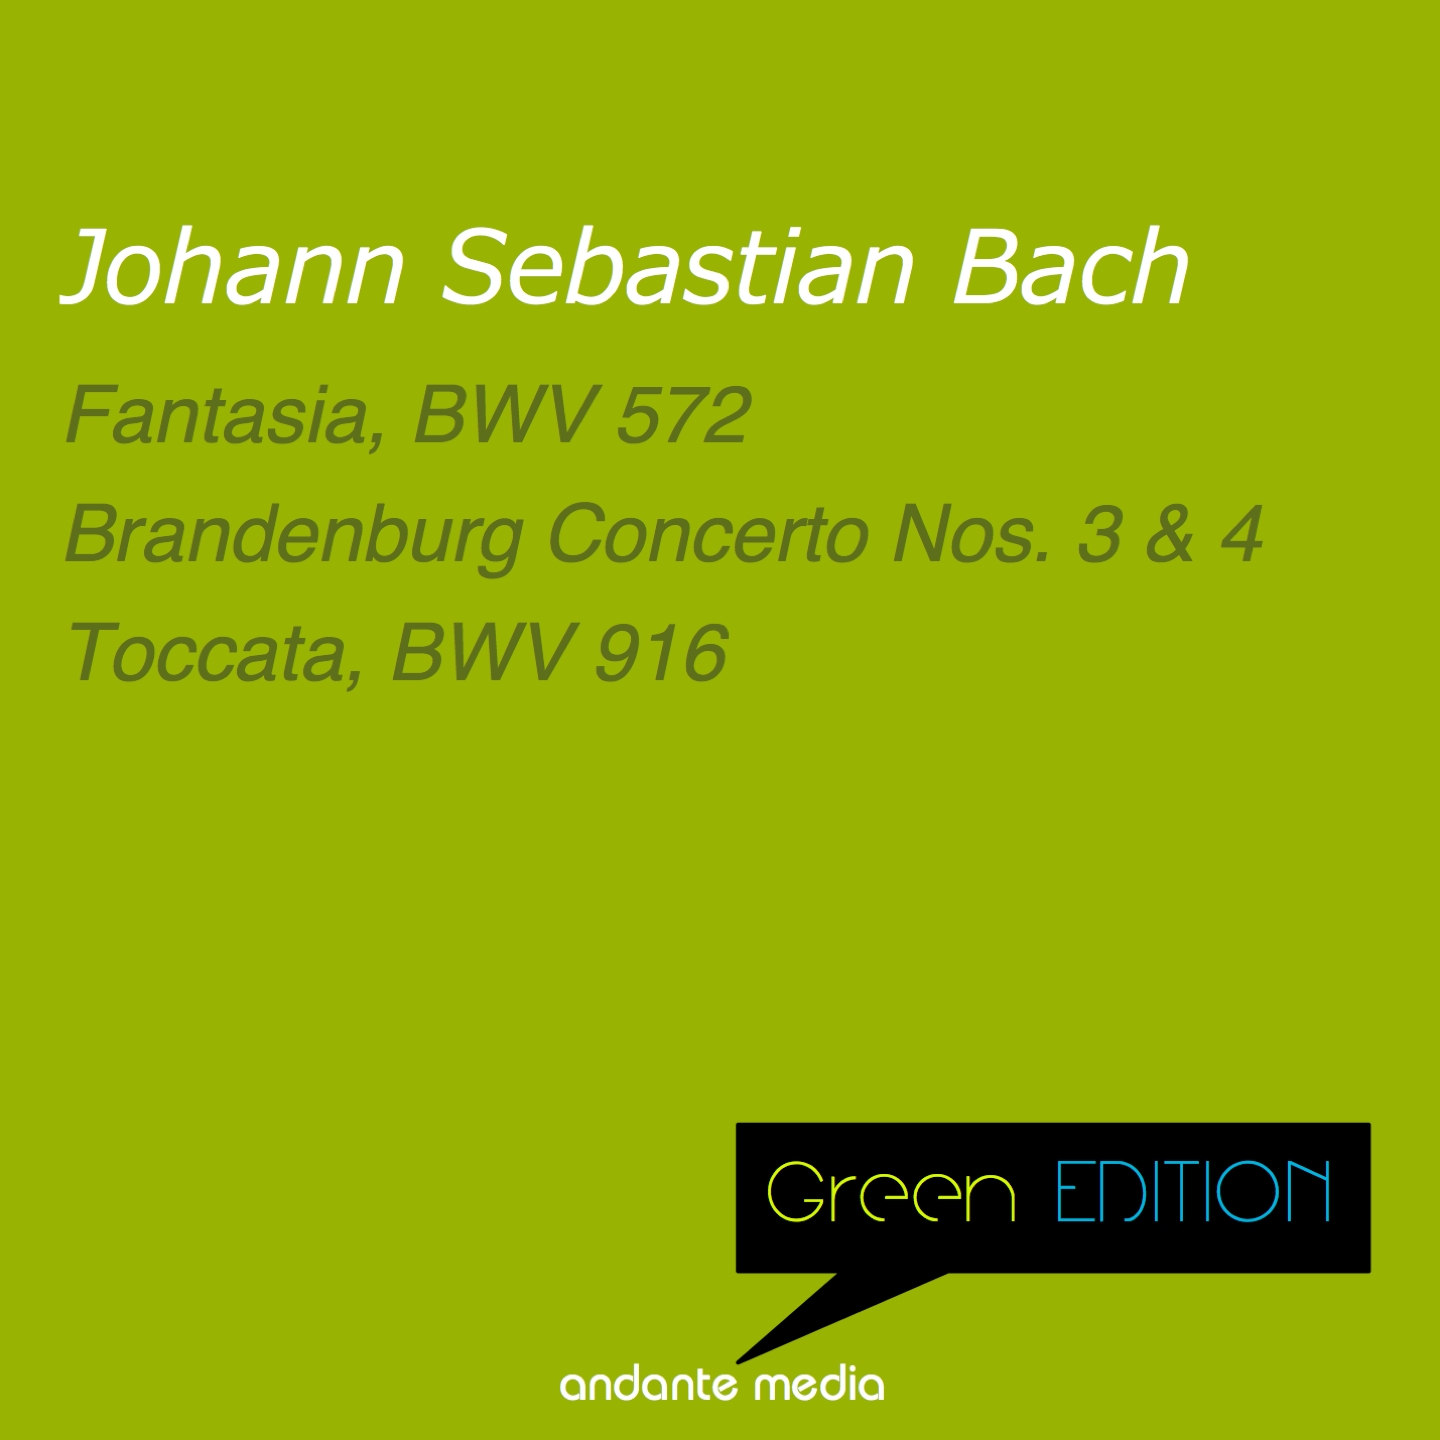 Toccata in G Major, BWV 916: III. Allegro